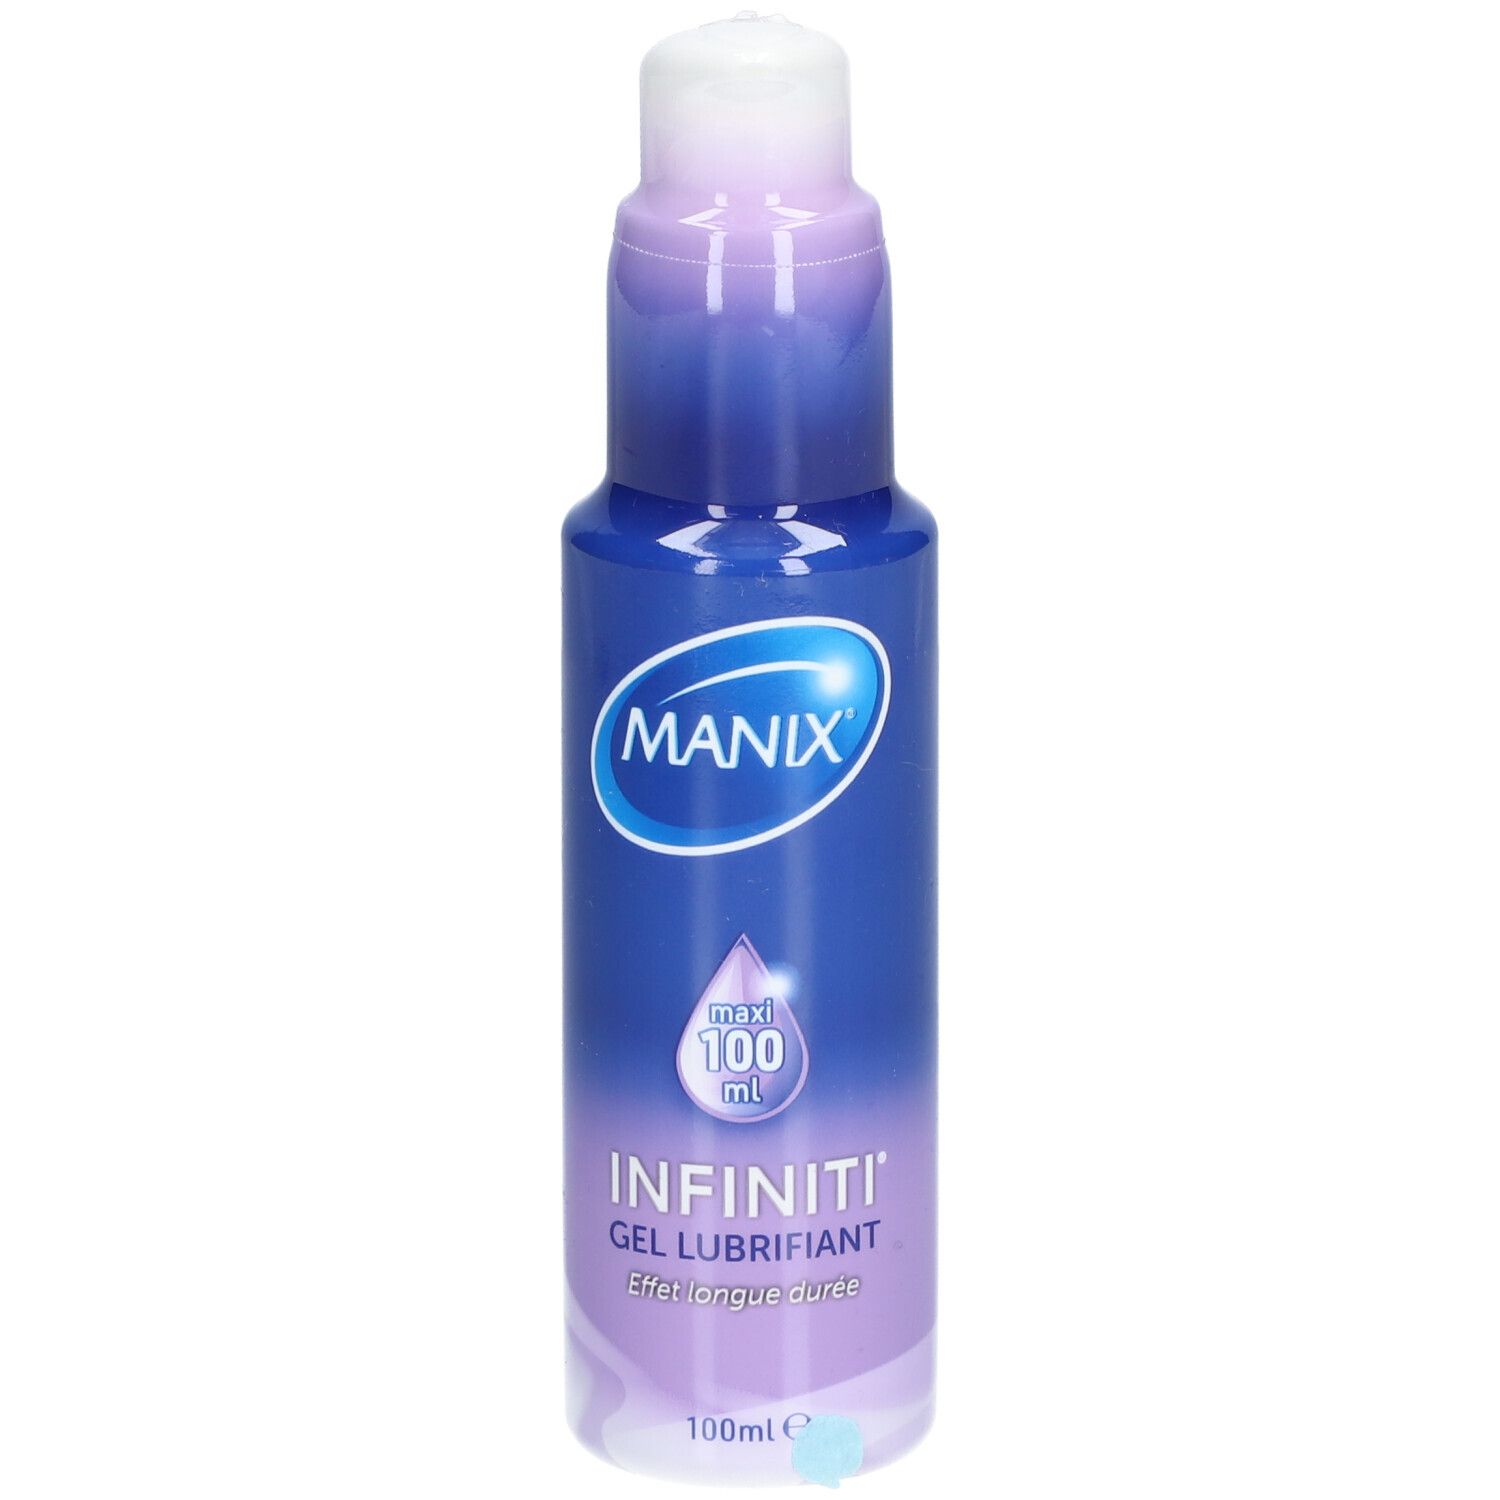 Manix infiniti gel lubrifiant silicone